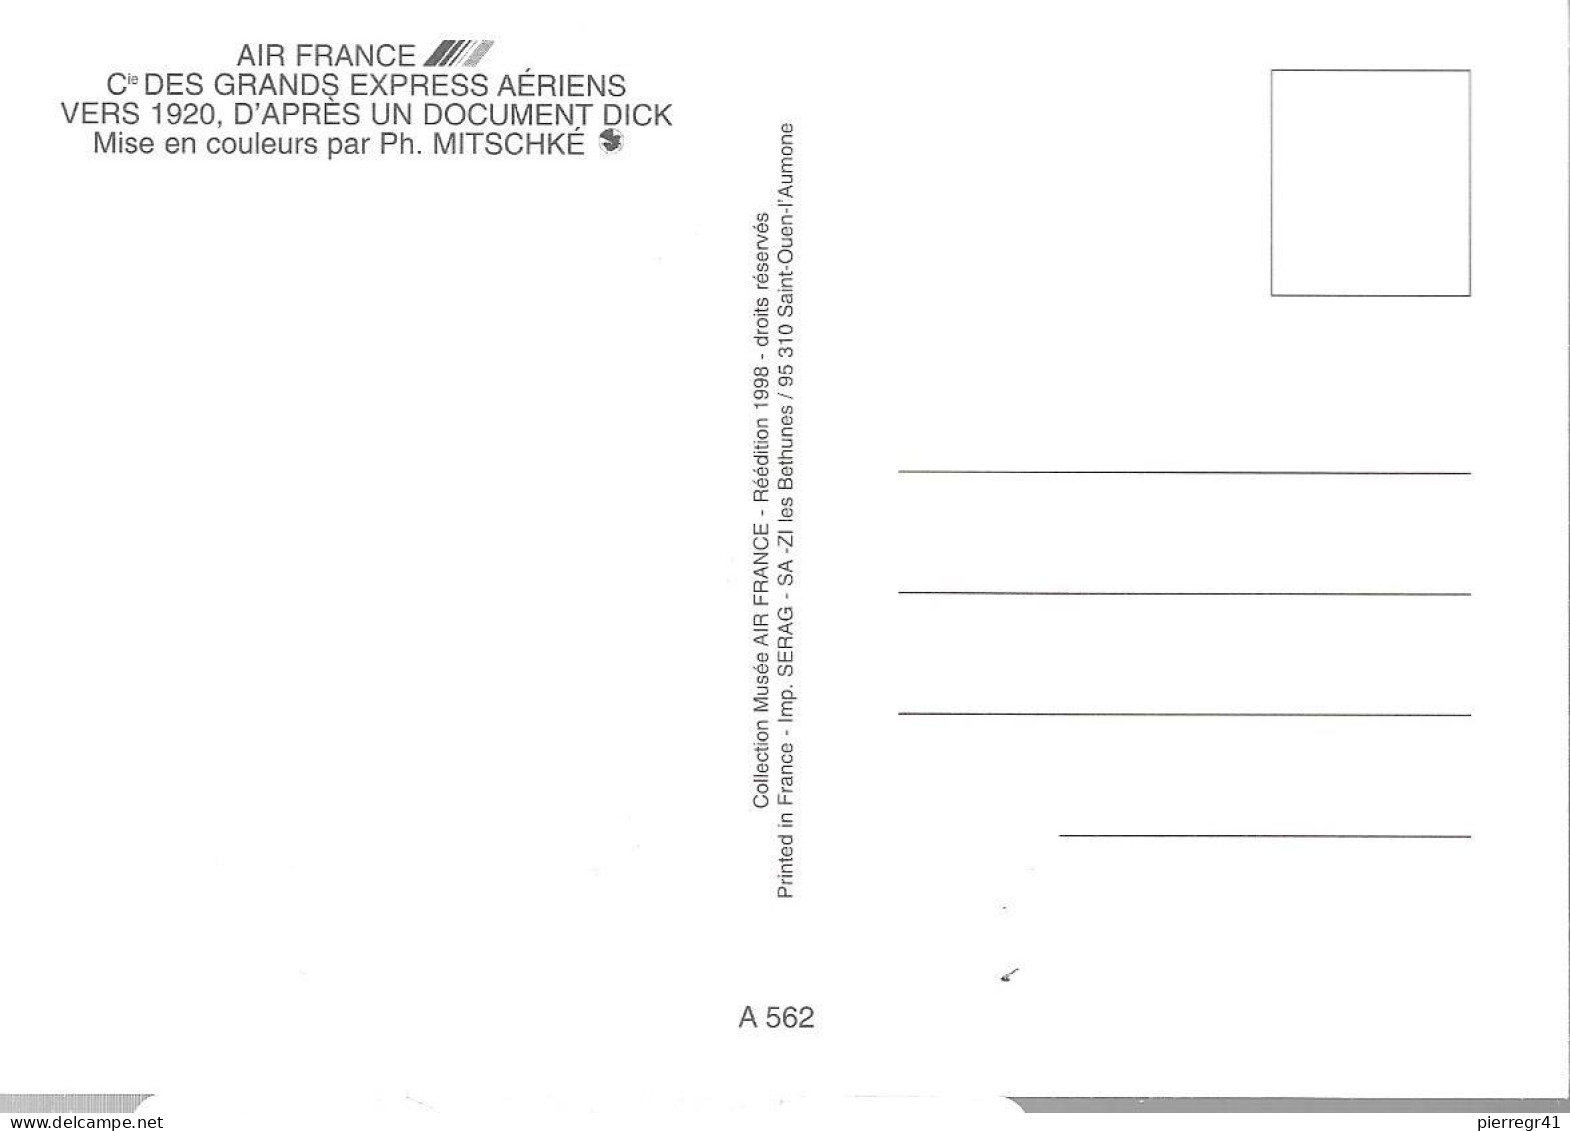 CPA-1980-AFFICHE-COPIE1920-AIR FRANCE-Cie Grands  EXPRESS Aeriens-Paris/Londres--TBE - 1919-1938: Interbellum